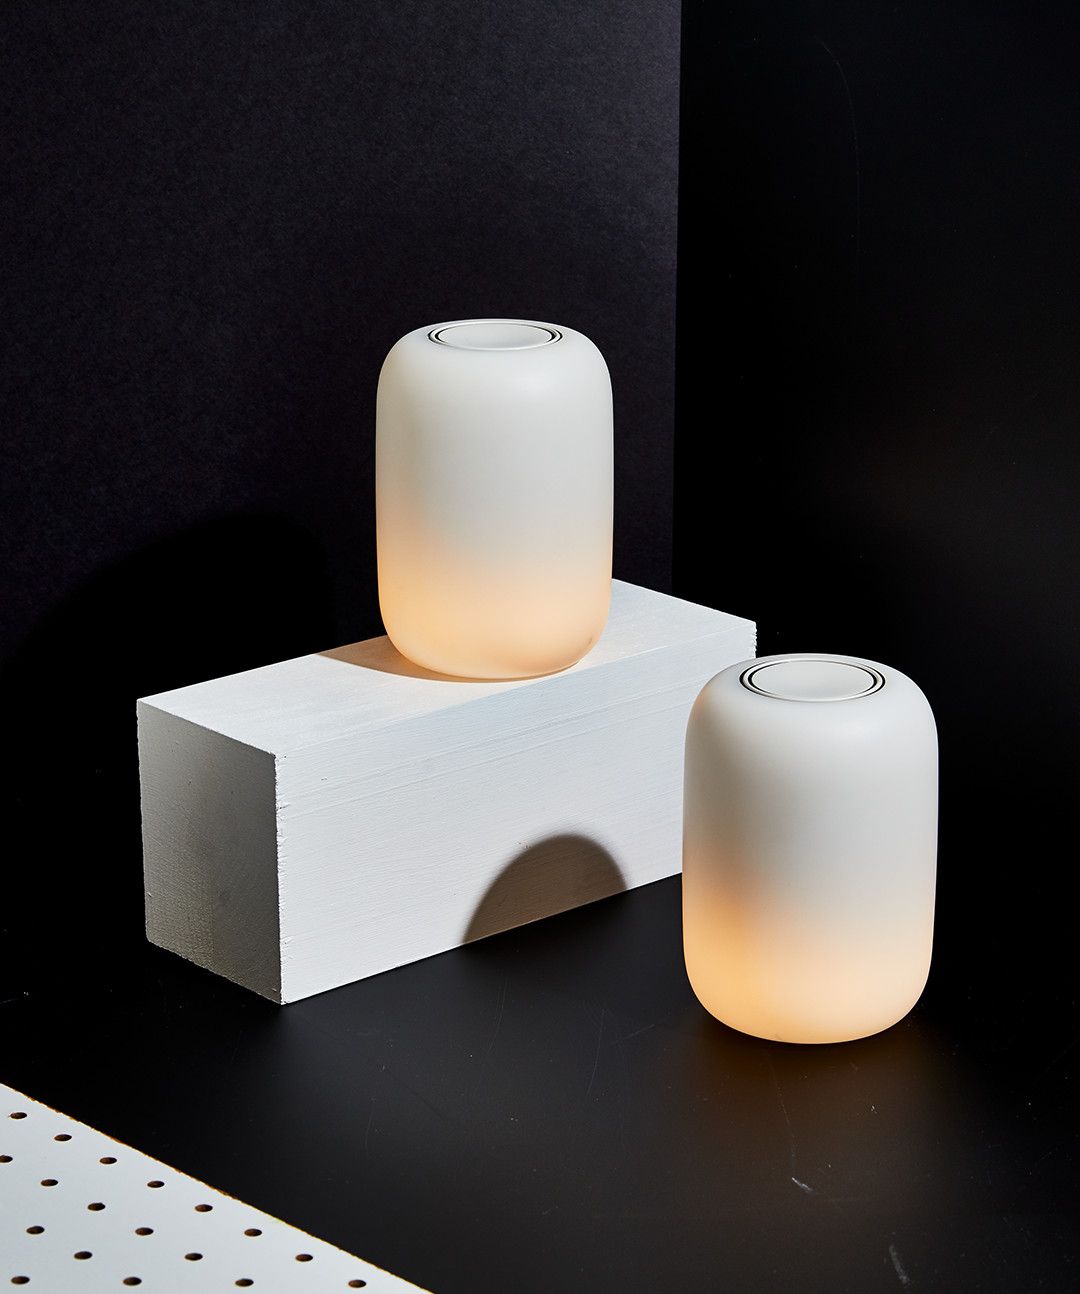 Glow Lights Make Going Easy - Casper Bedside Lamp Review